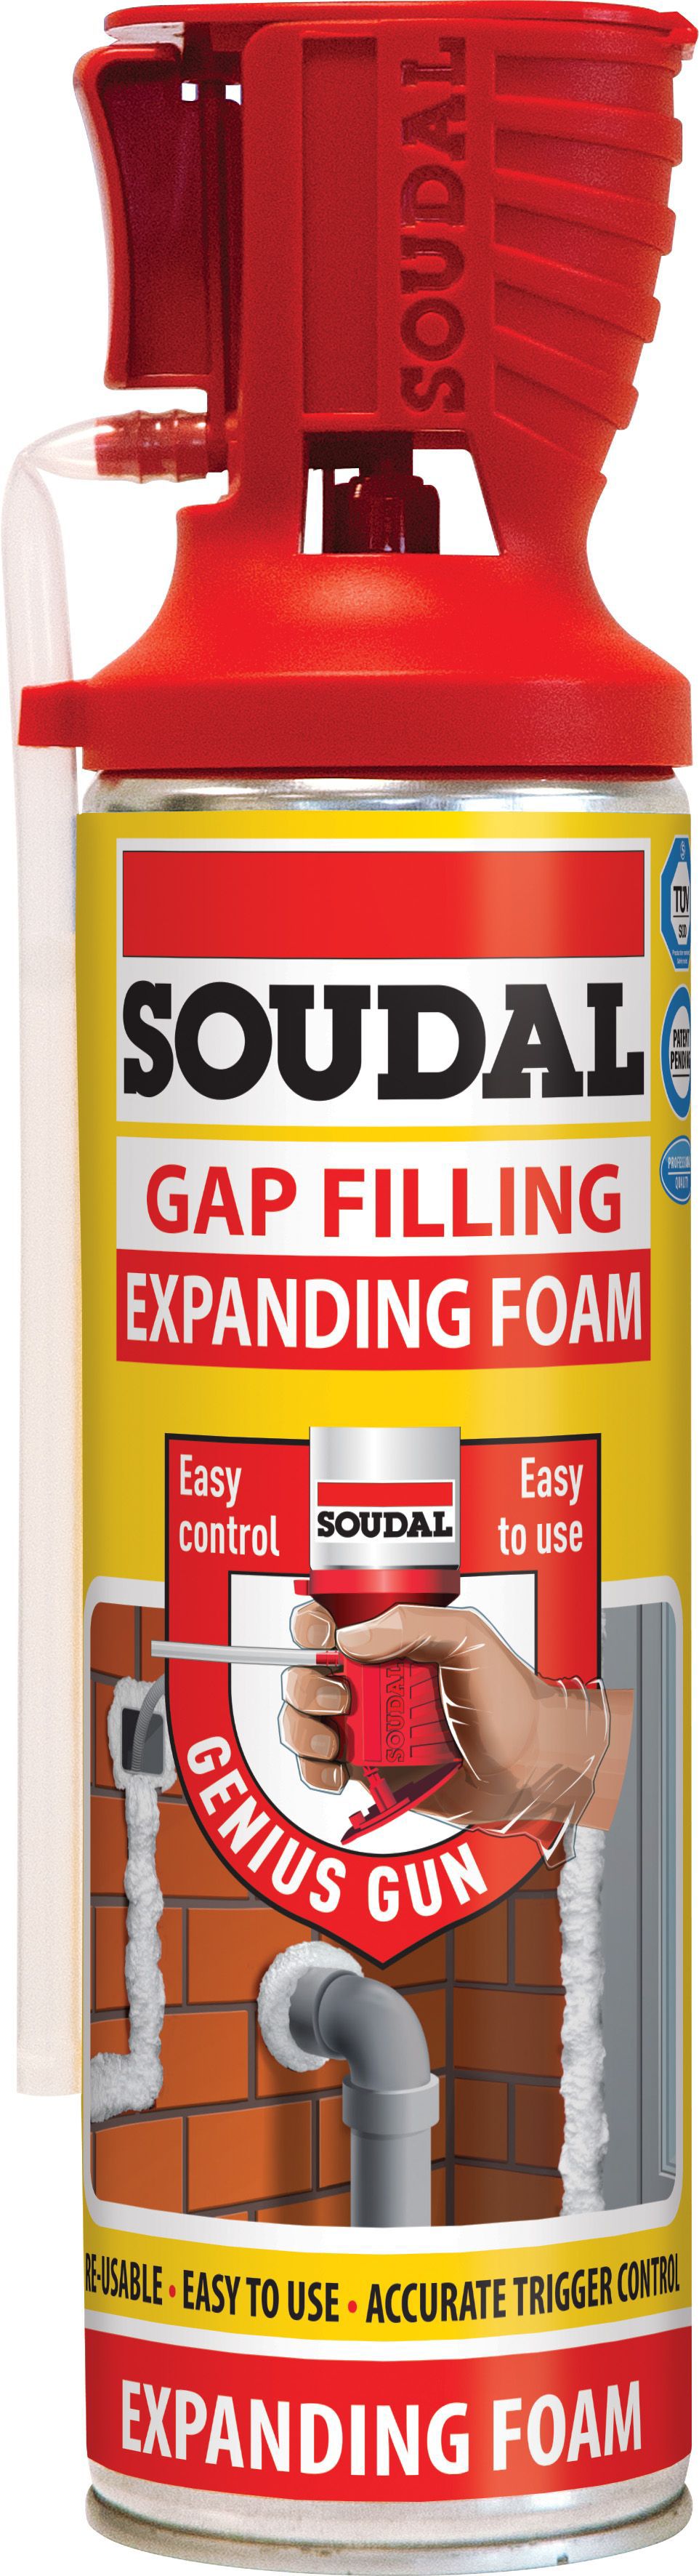 Soudal Genius Gun Gap filling Expanding foam 500ml